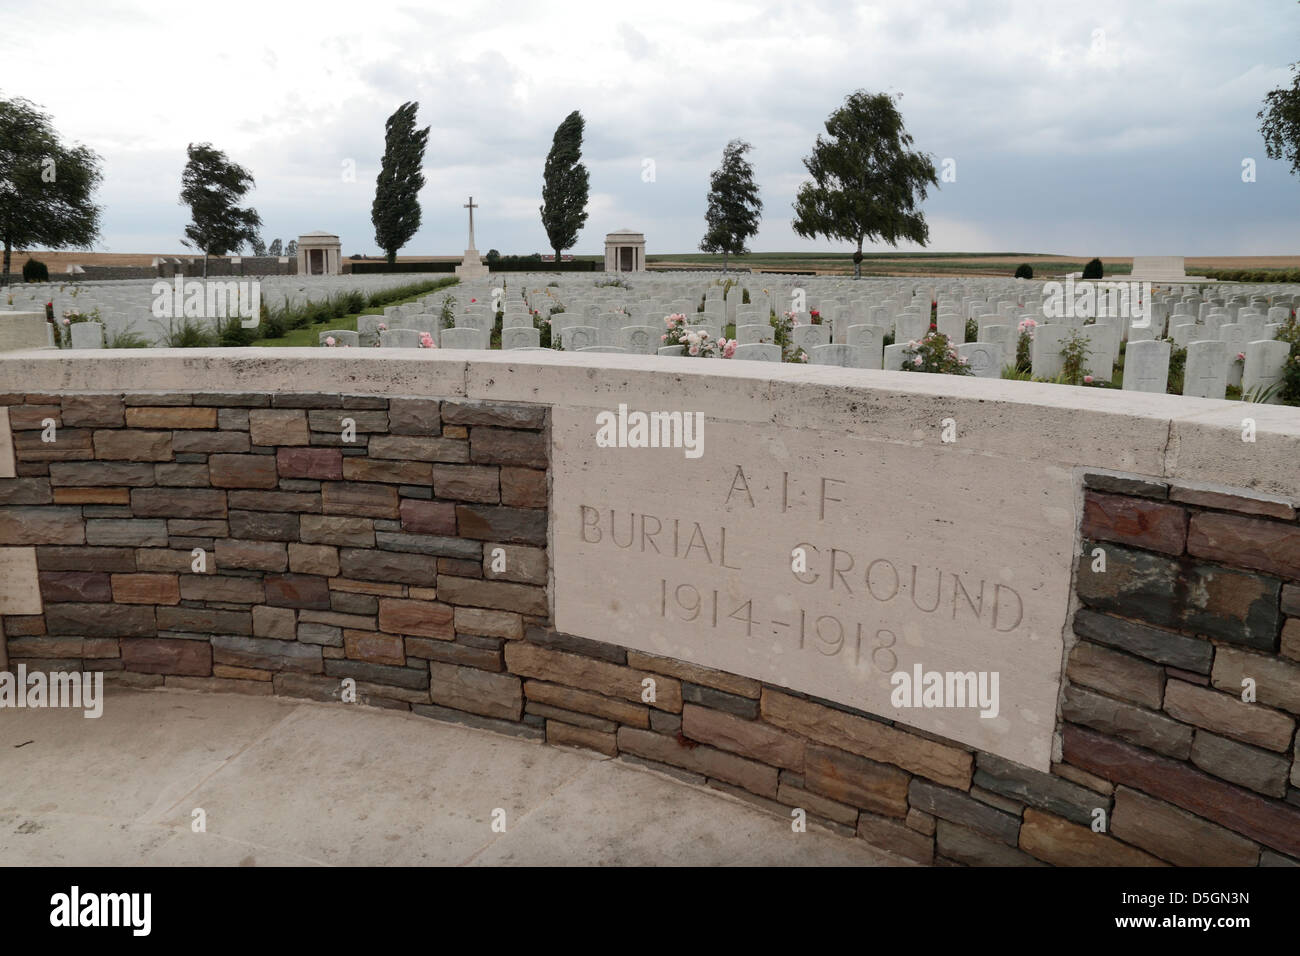 Eingangswand, A.I.F. Burial Ground, einem Commonwealth-Friedhof in Flers, Somme, Picardie, Frankreich. Stockfoto